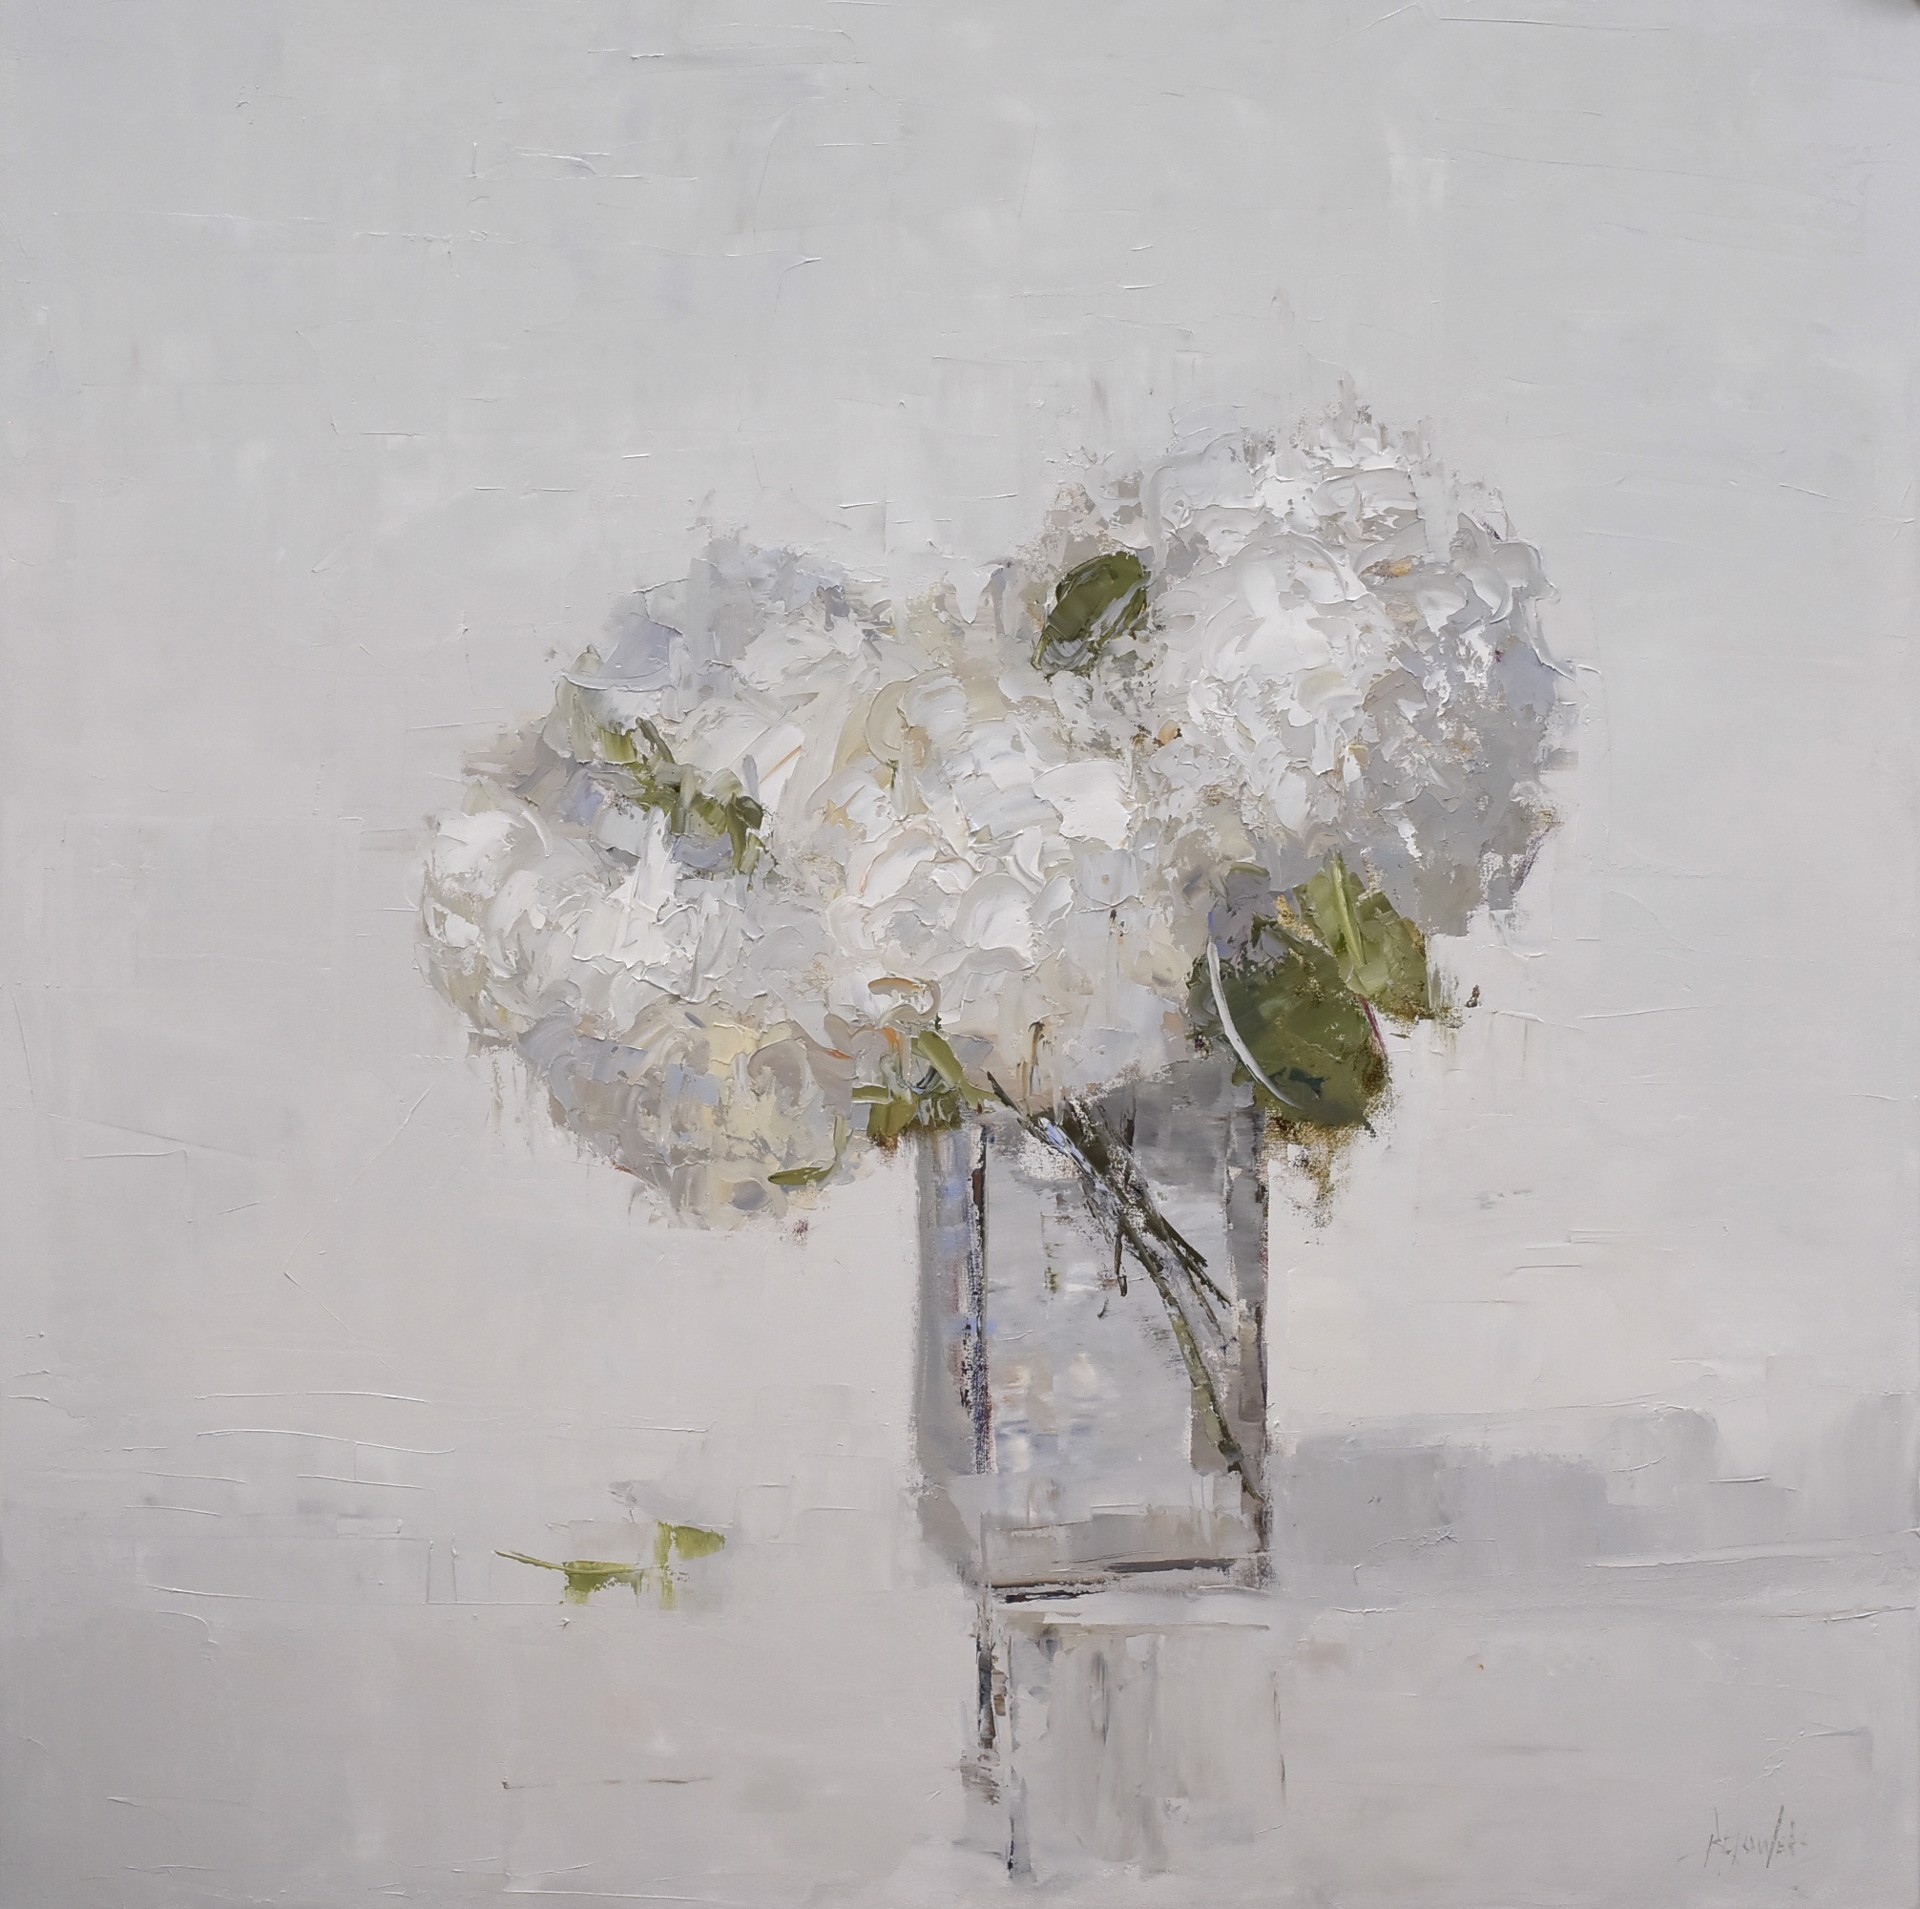 Hydrangeas in White Room by Barbara Flowers